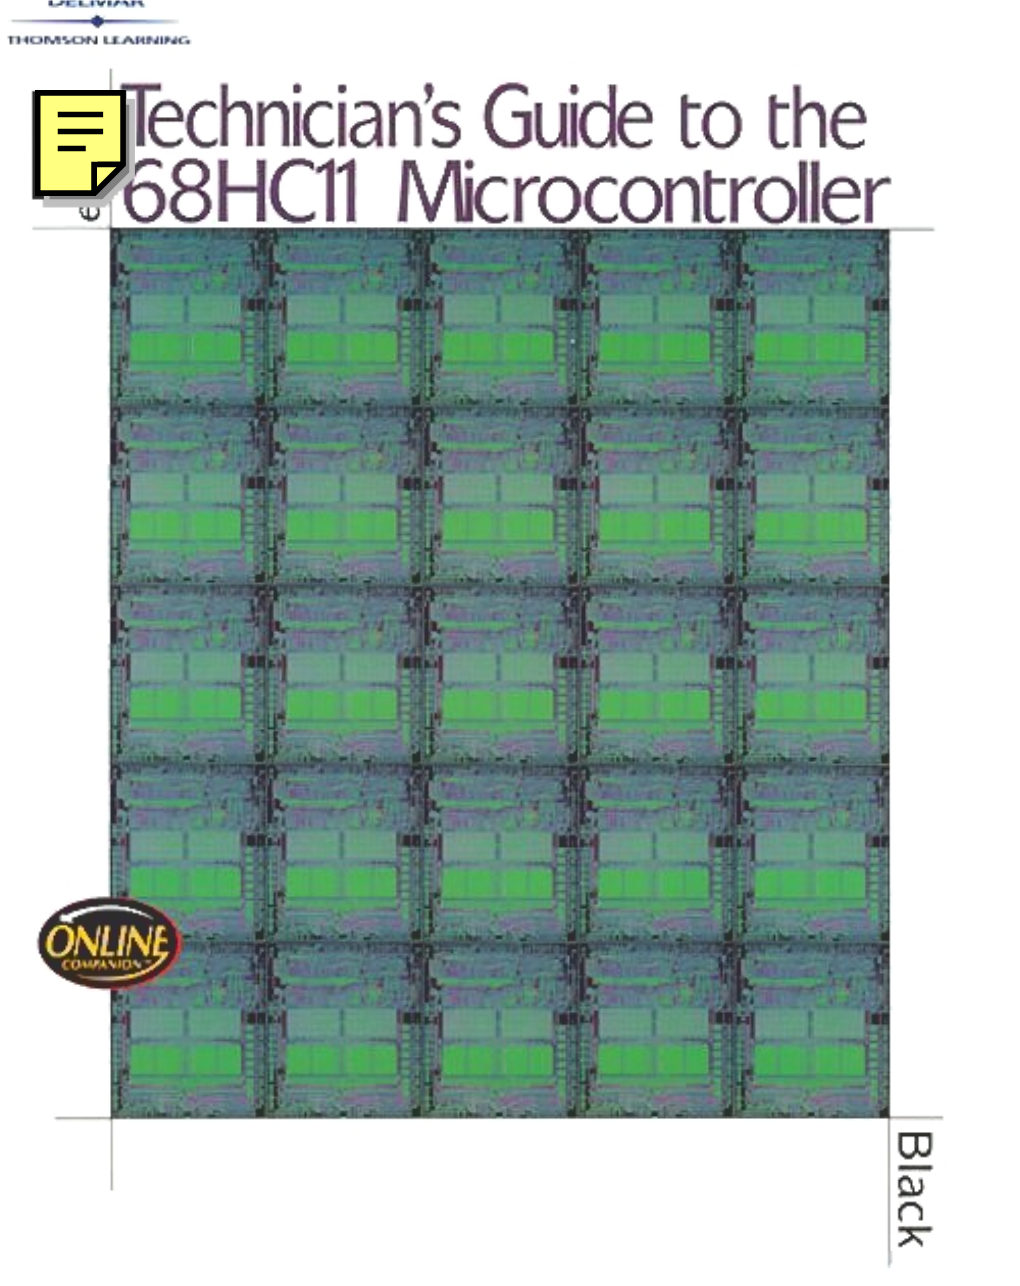 Technician's Guide to 68HC11 Microcontroller.Pdf